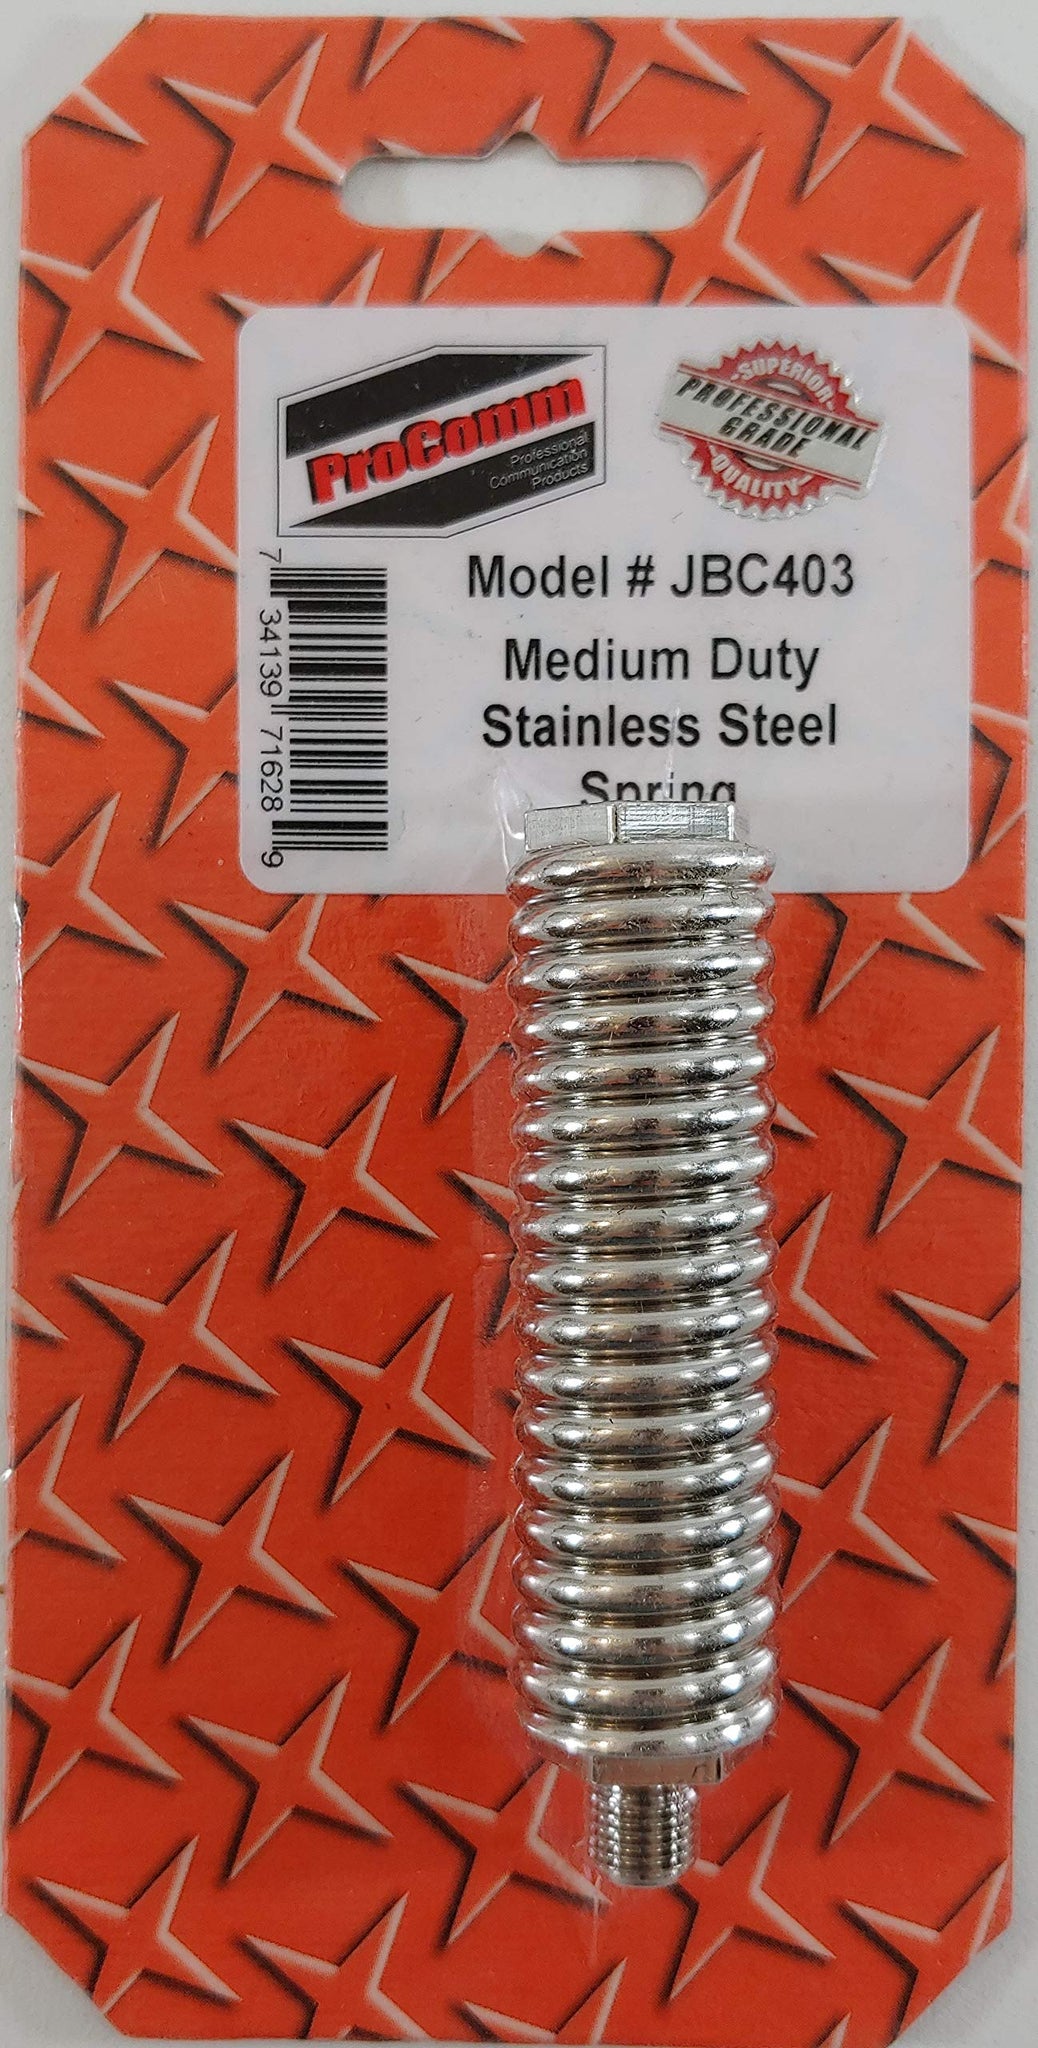 Procomm JBC403 4" Medium Duty Stainless Steel Spring